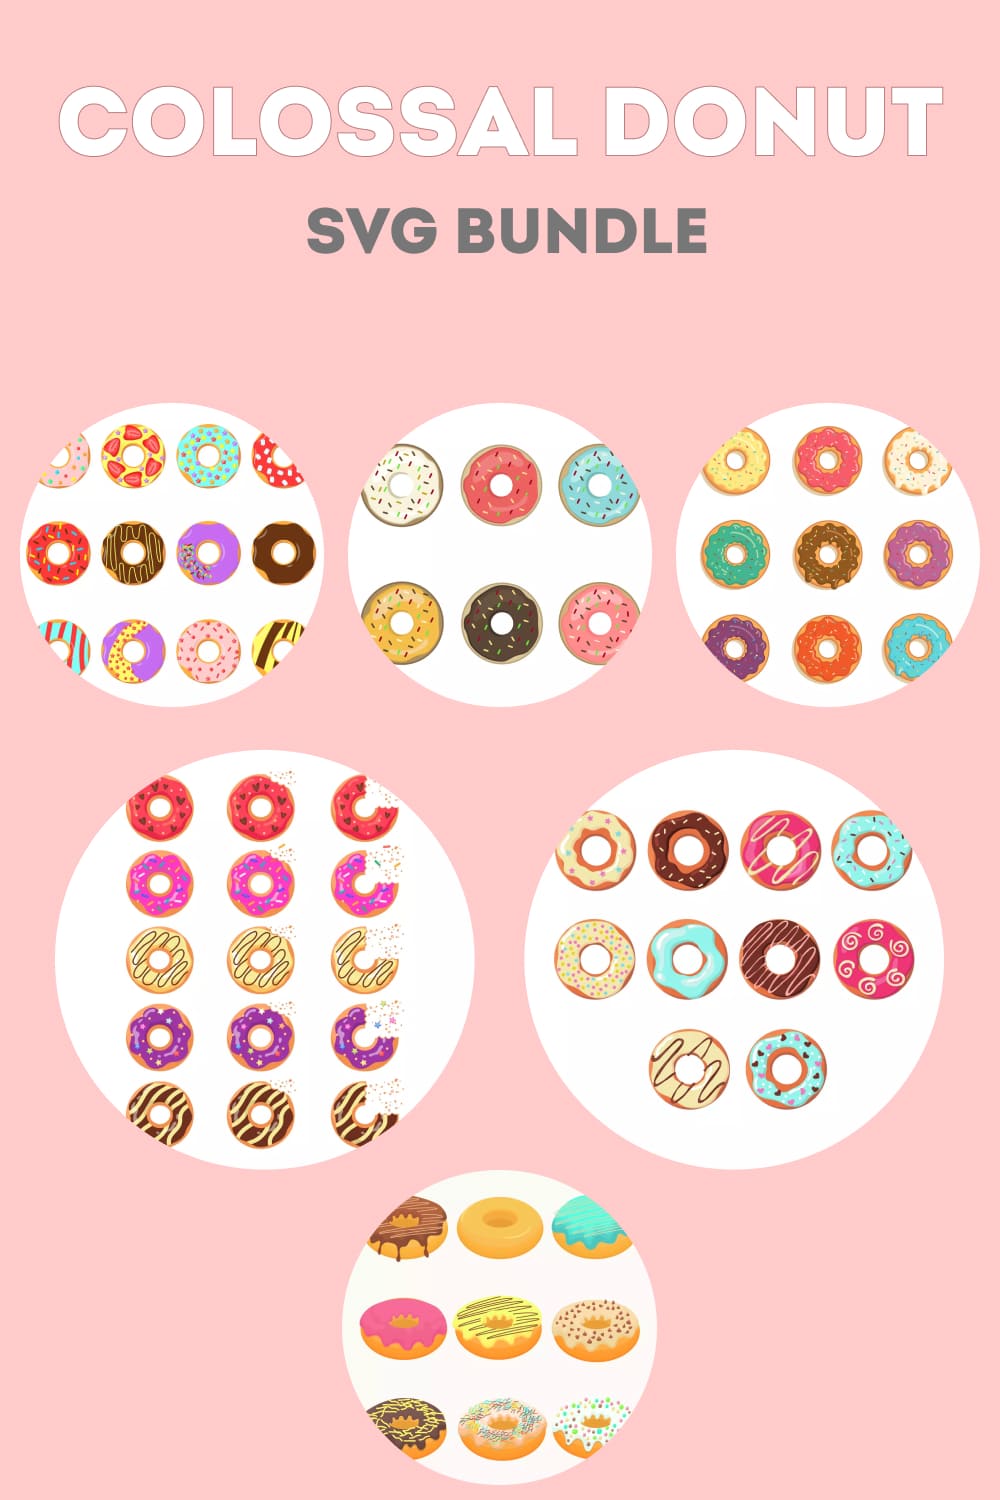 Donut SVG Bundle Pinterest.